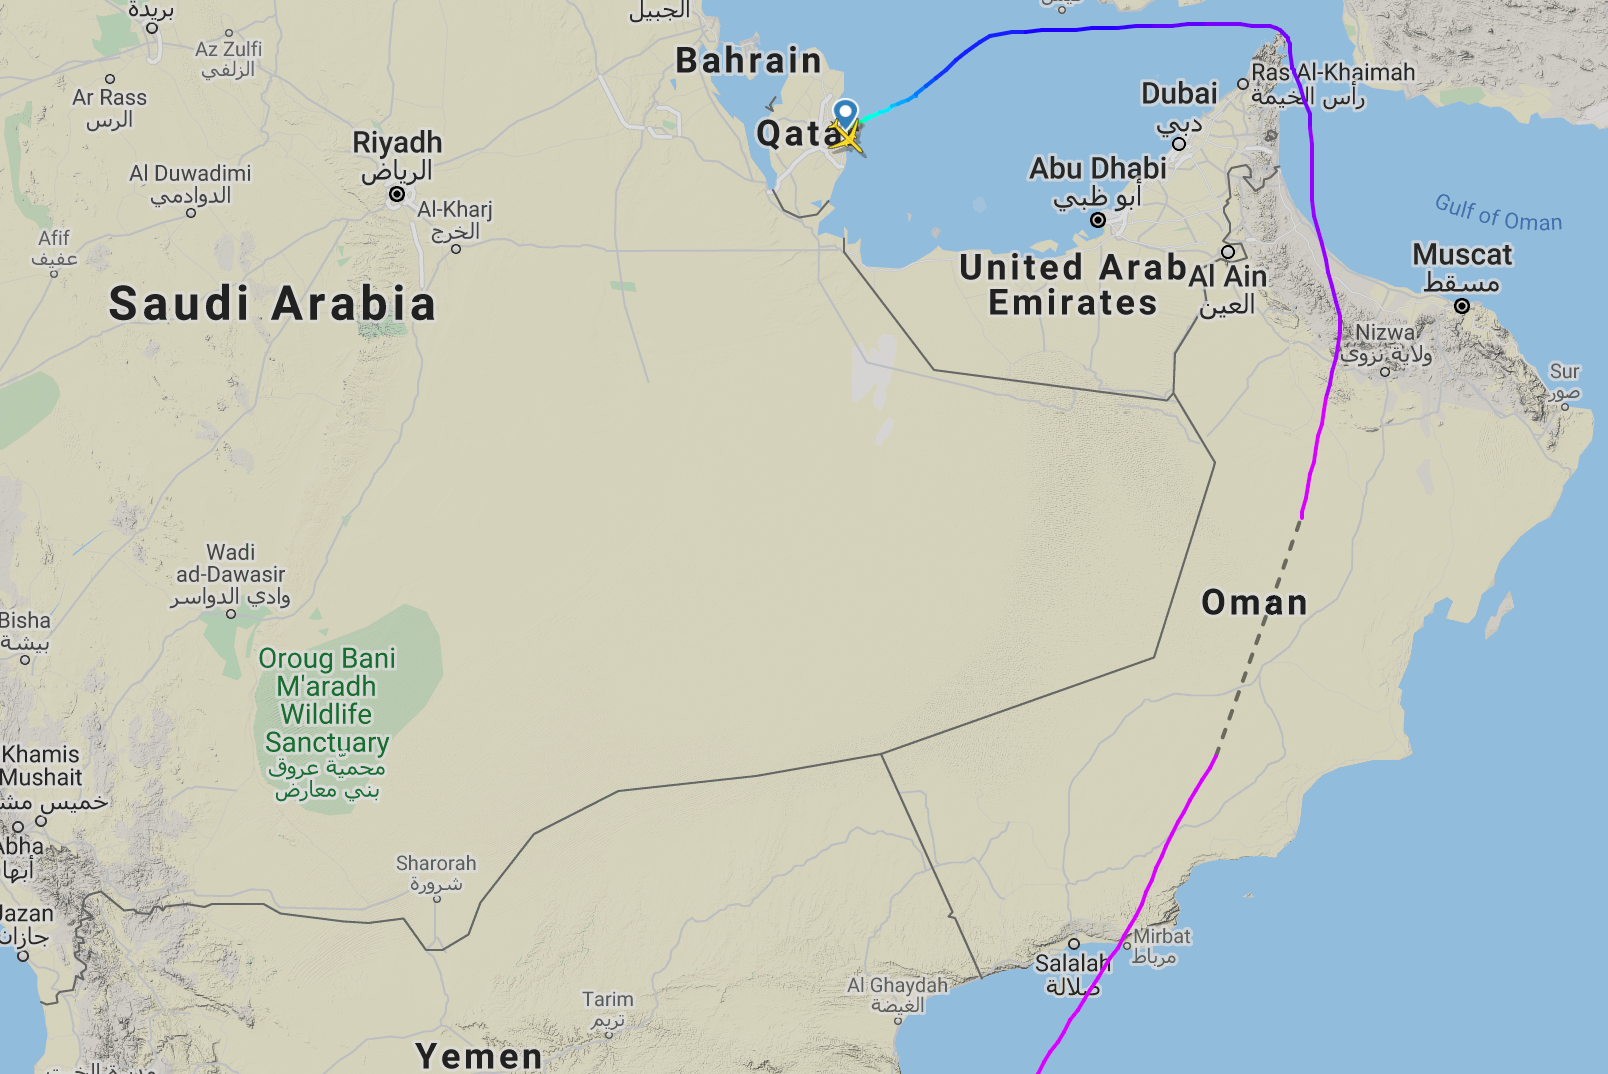 Long detour: Qatar Airways flight path from Johannesburg